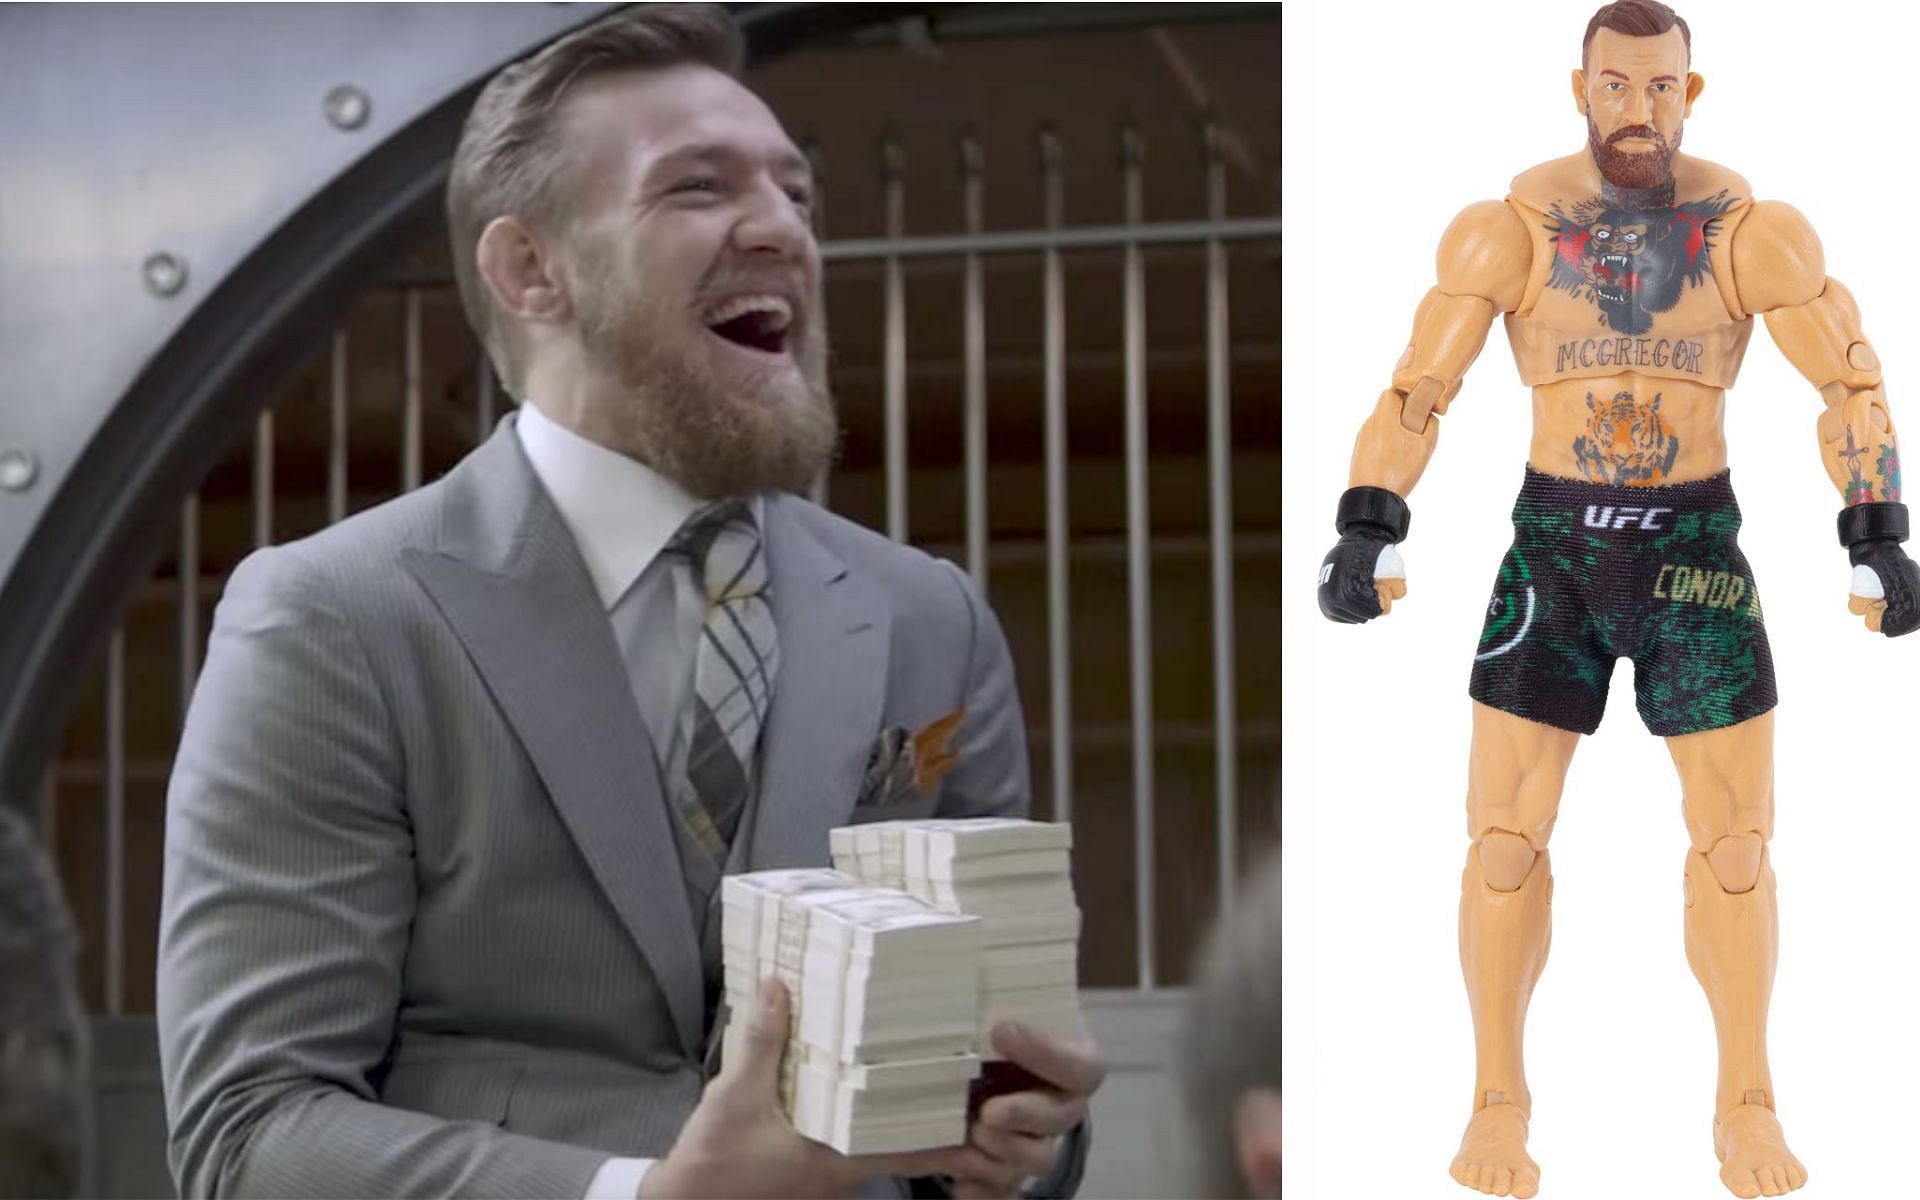 Conor McGregor and his action figure. [via UFC]